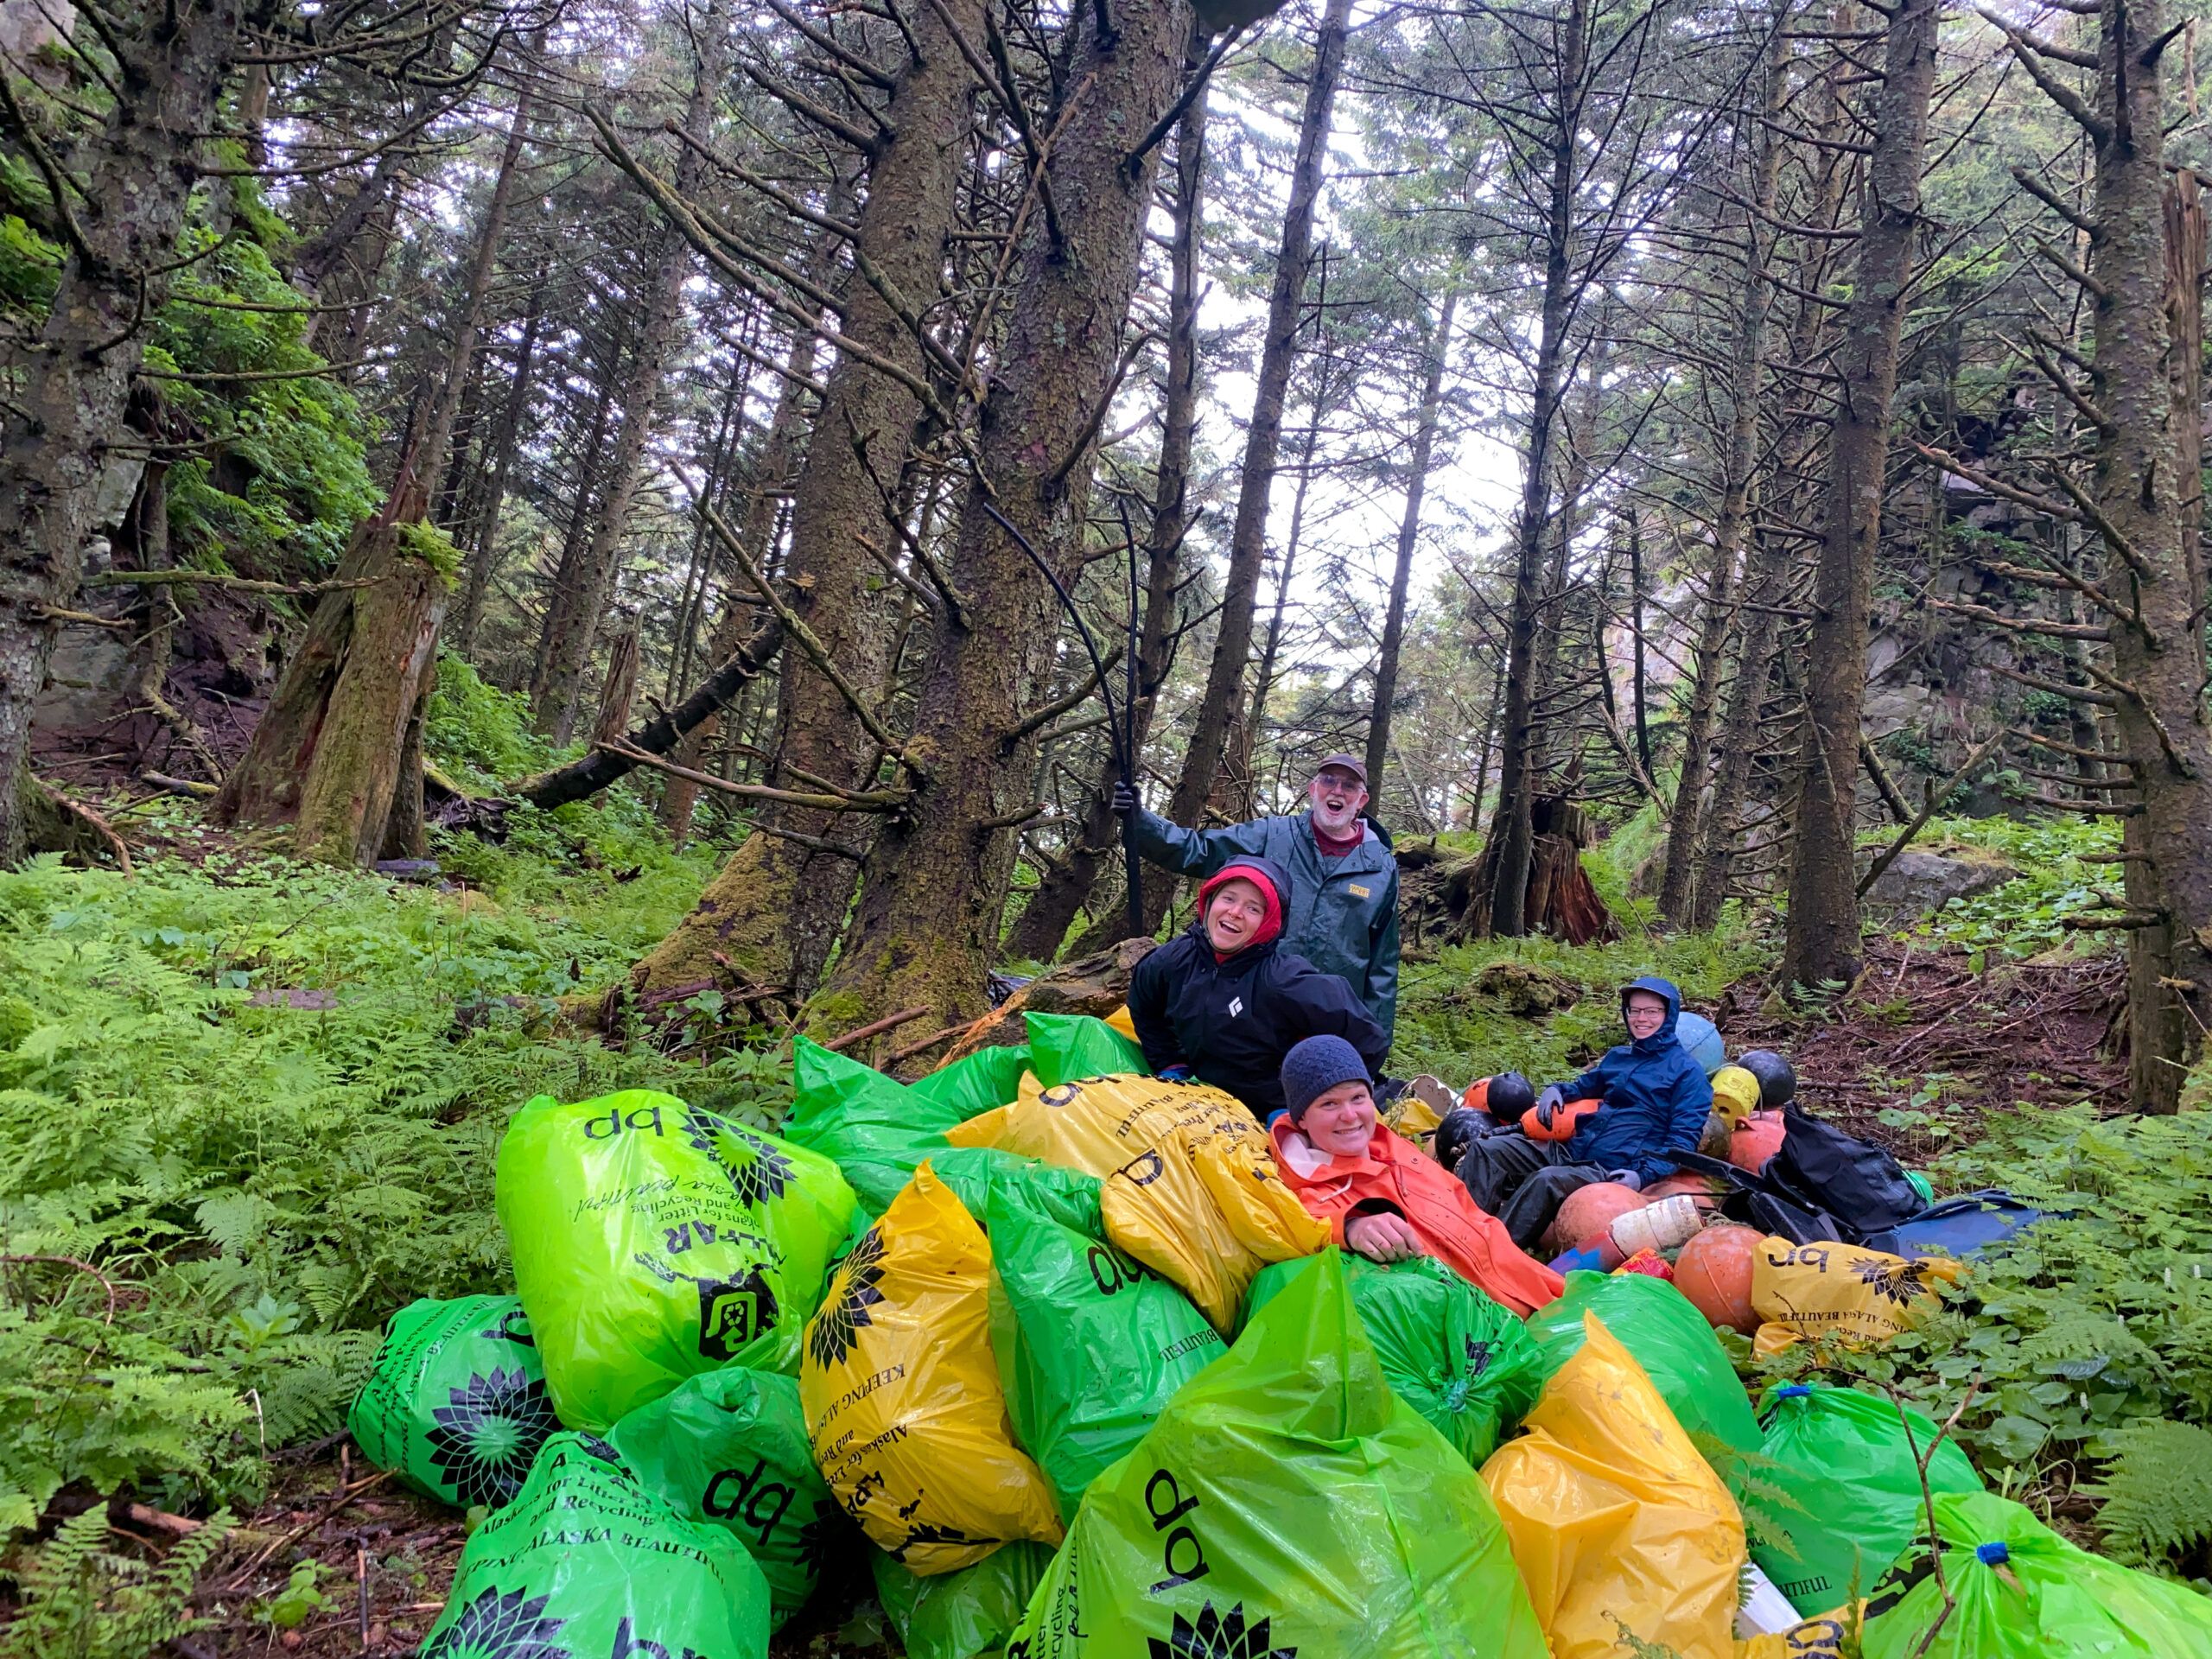 people piled on trash bags in woods